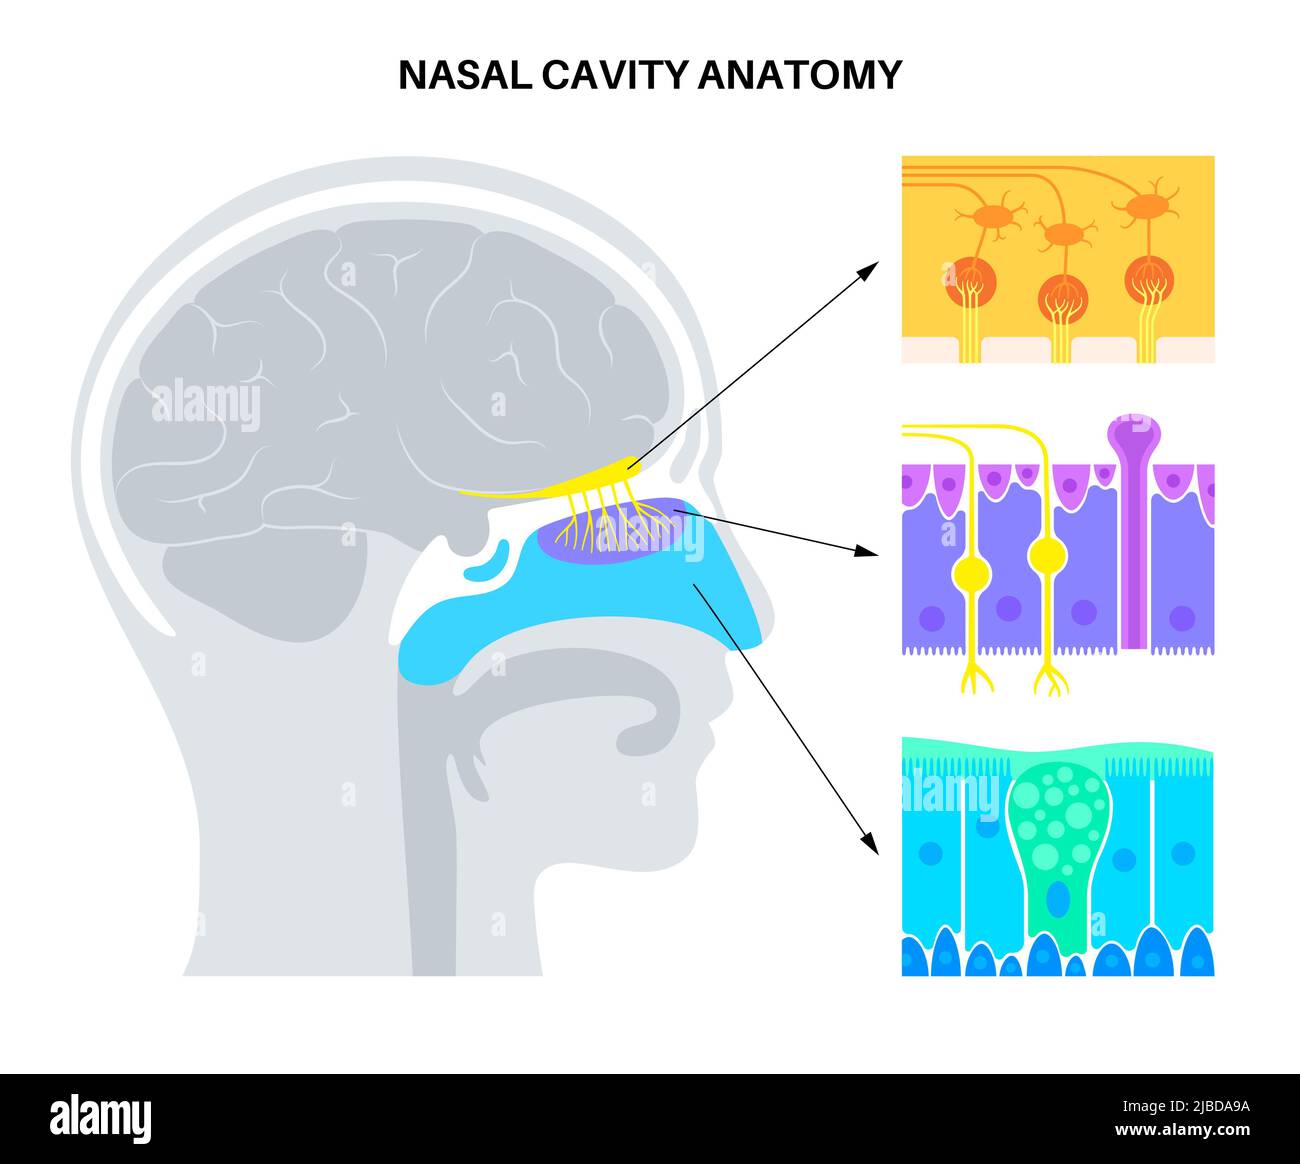 Nasal Cavity Anatomy Illustration Stock Photo Alamy